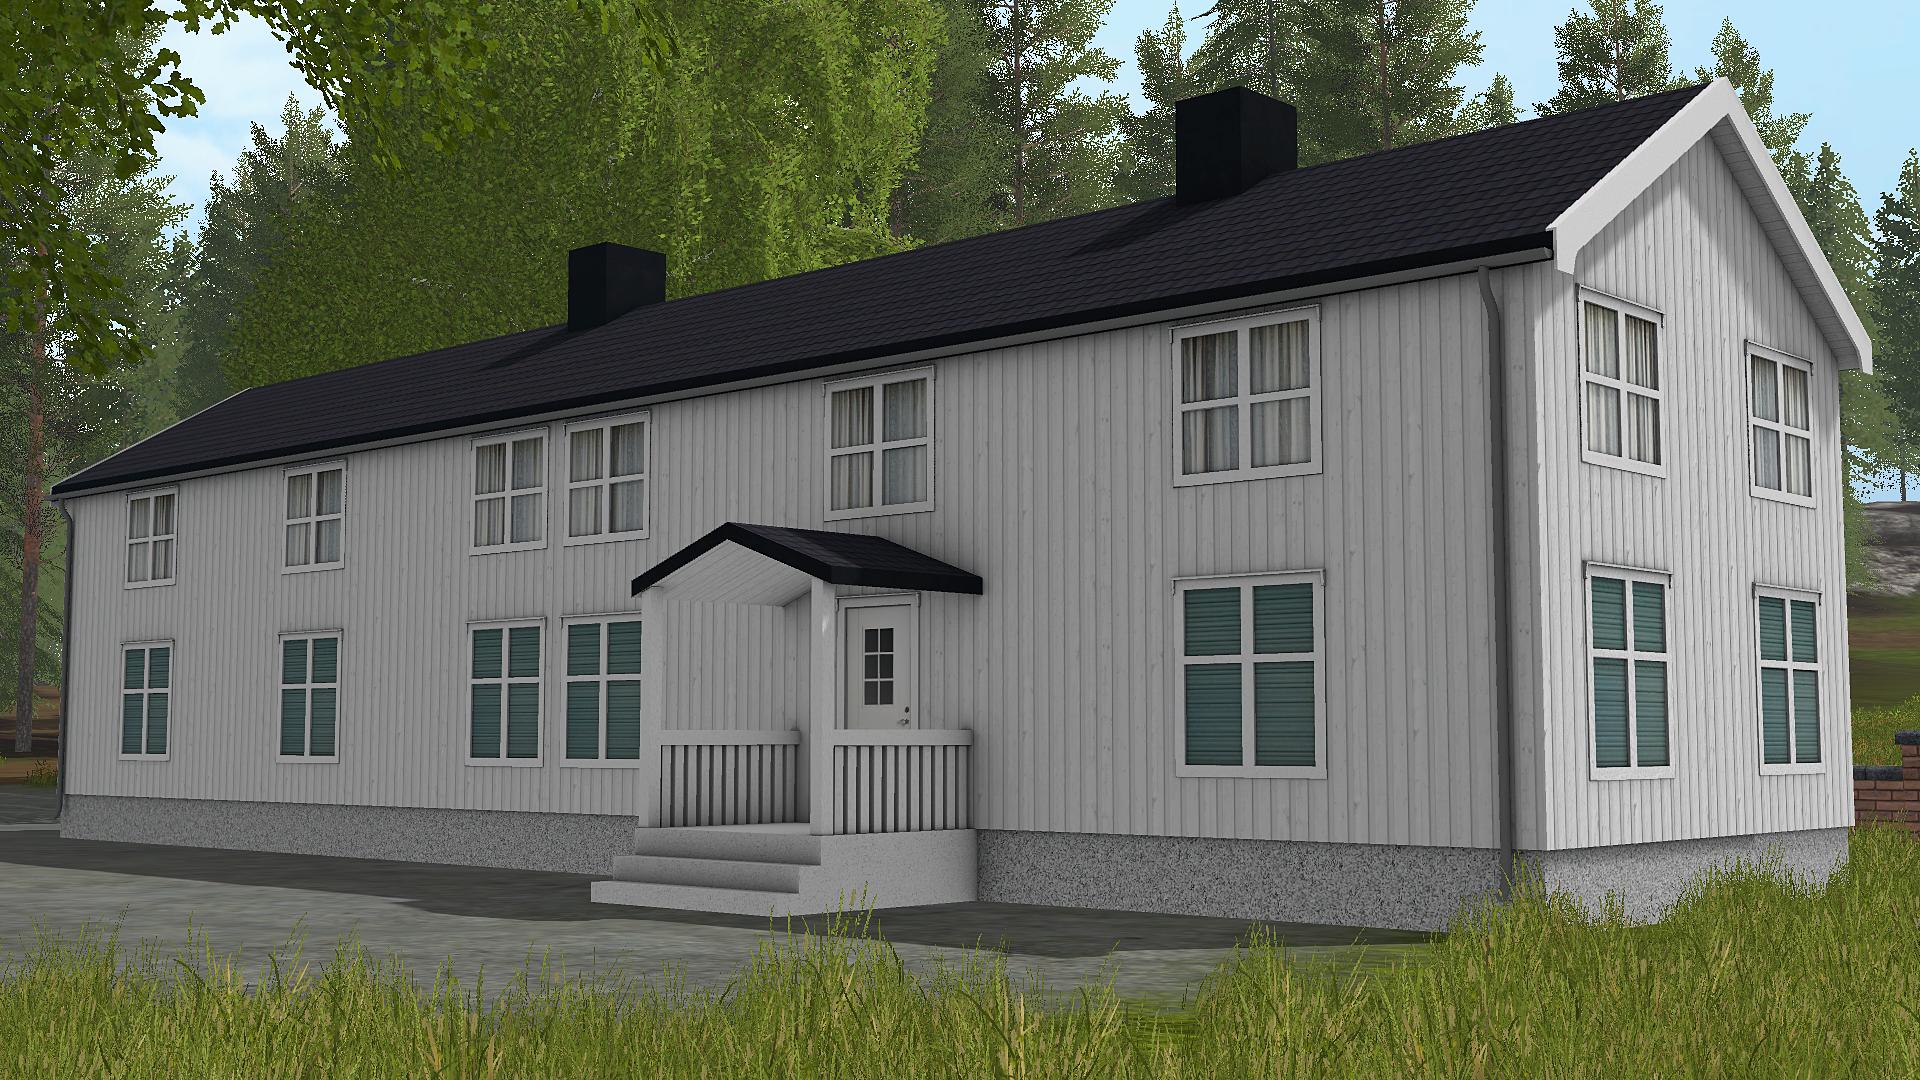 FS17 - Nordic Farm Buildings V1.0